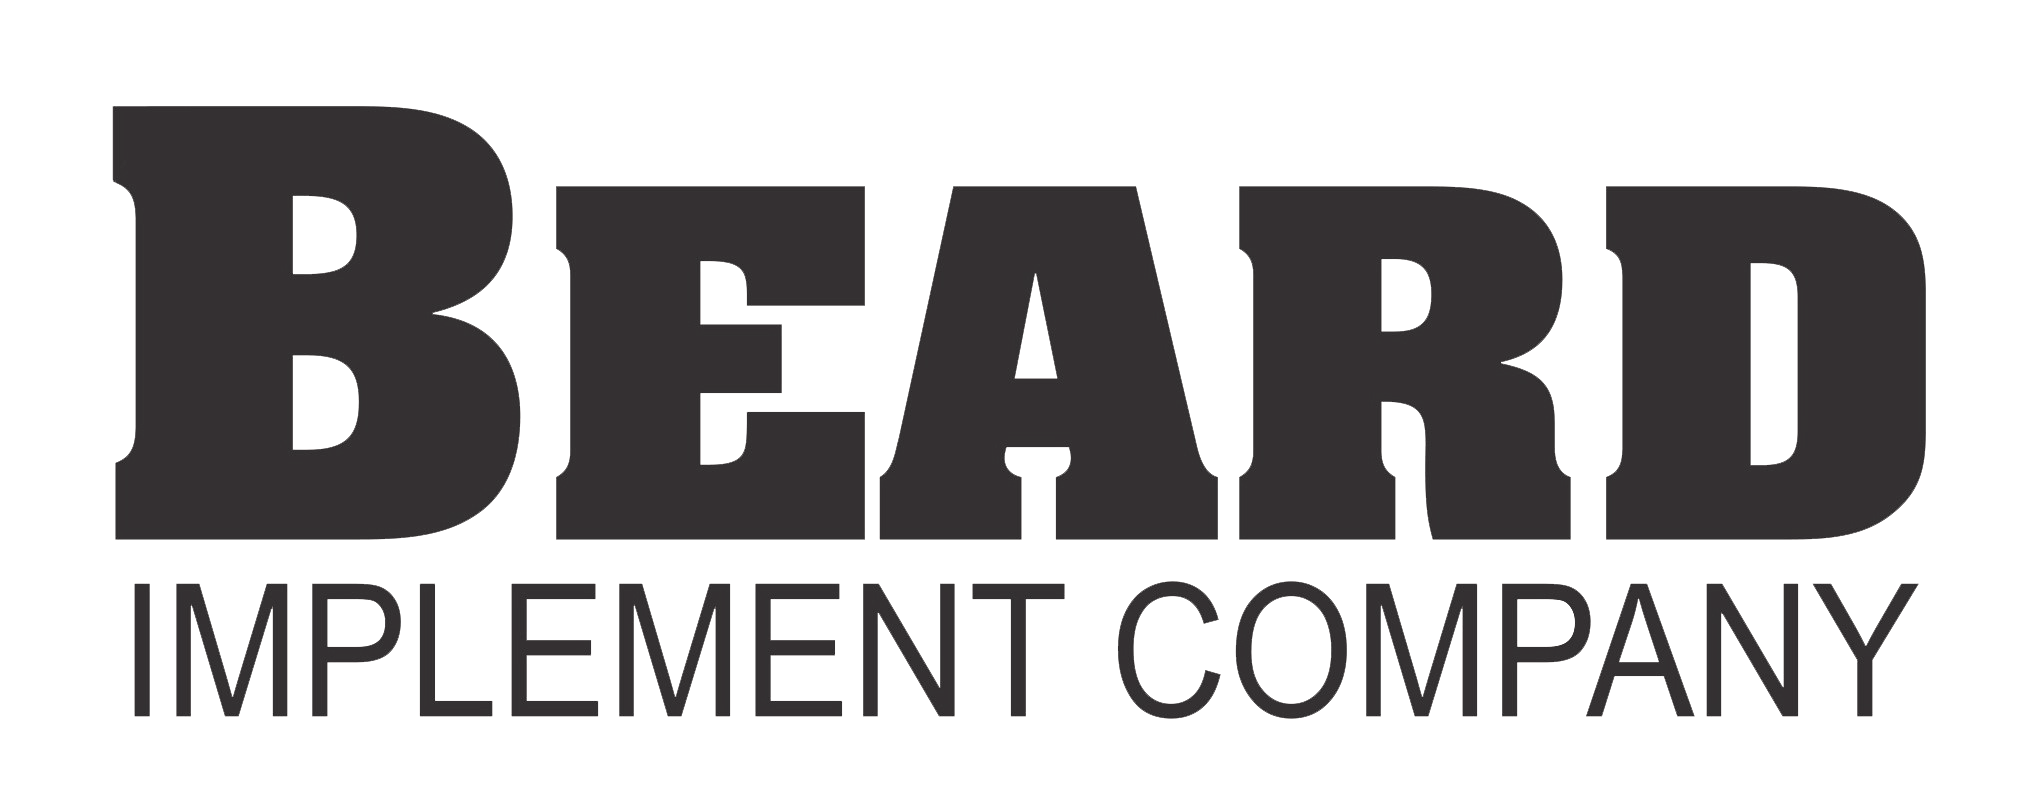 Beard Implement Company's Logo